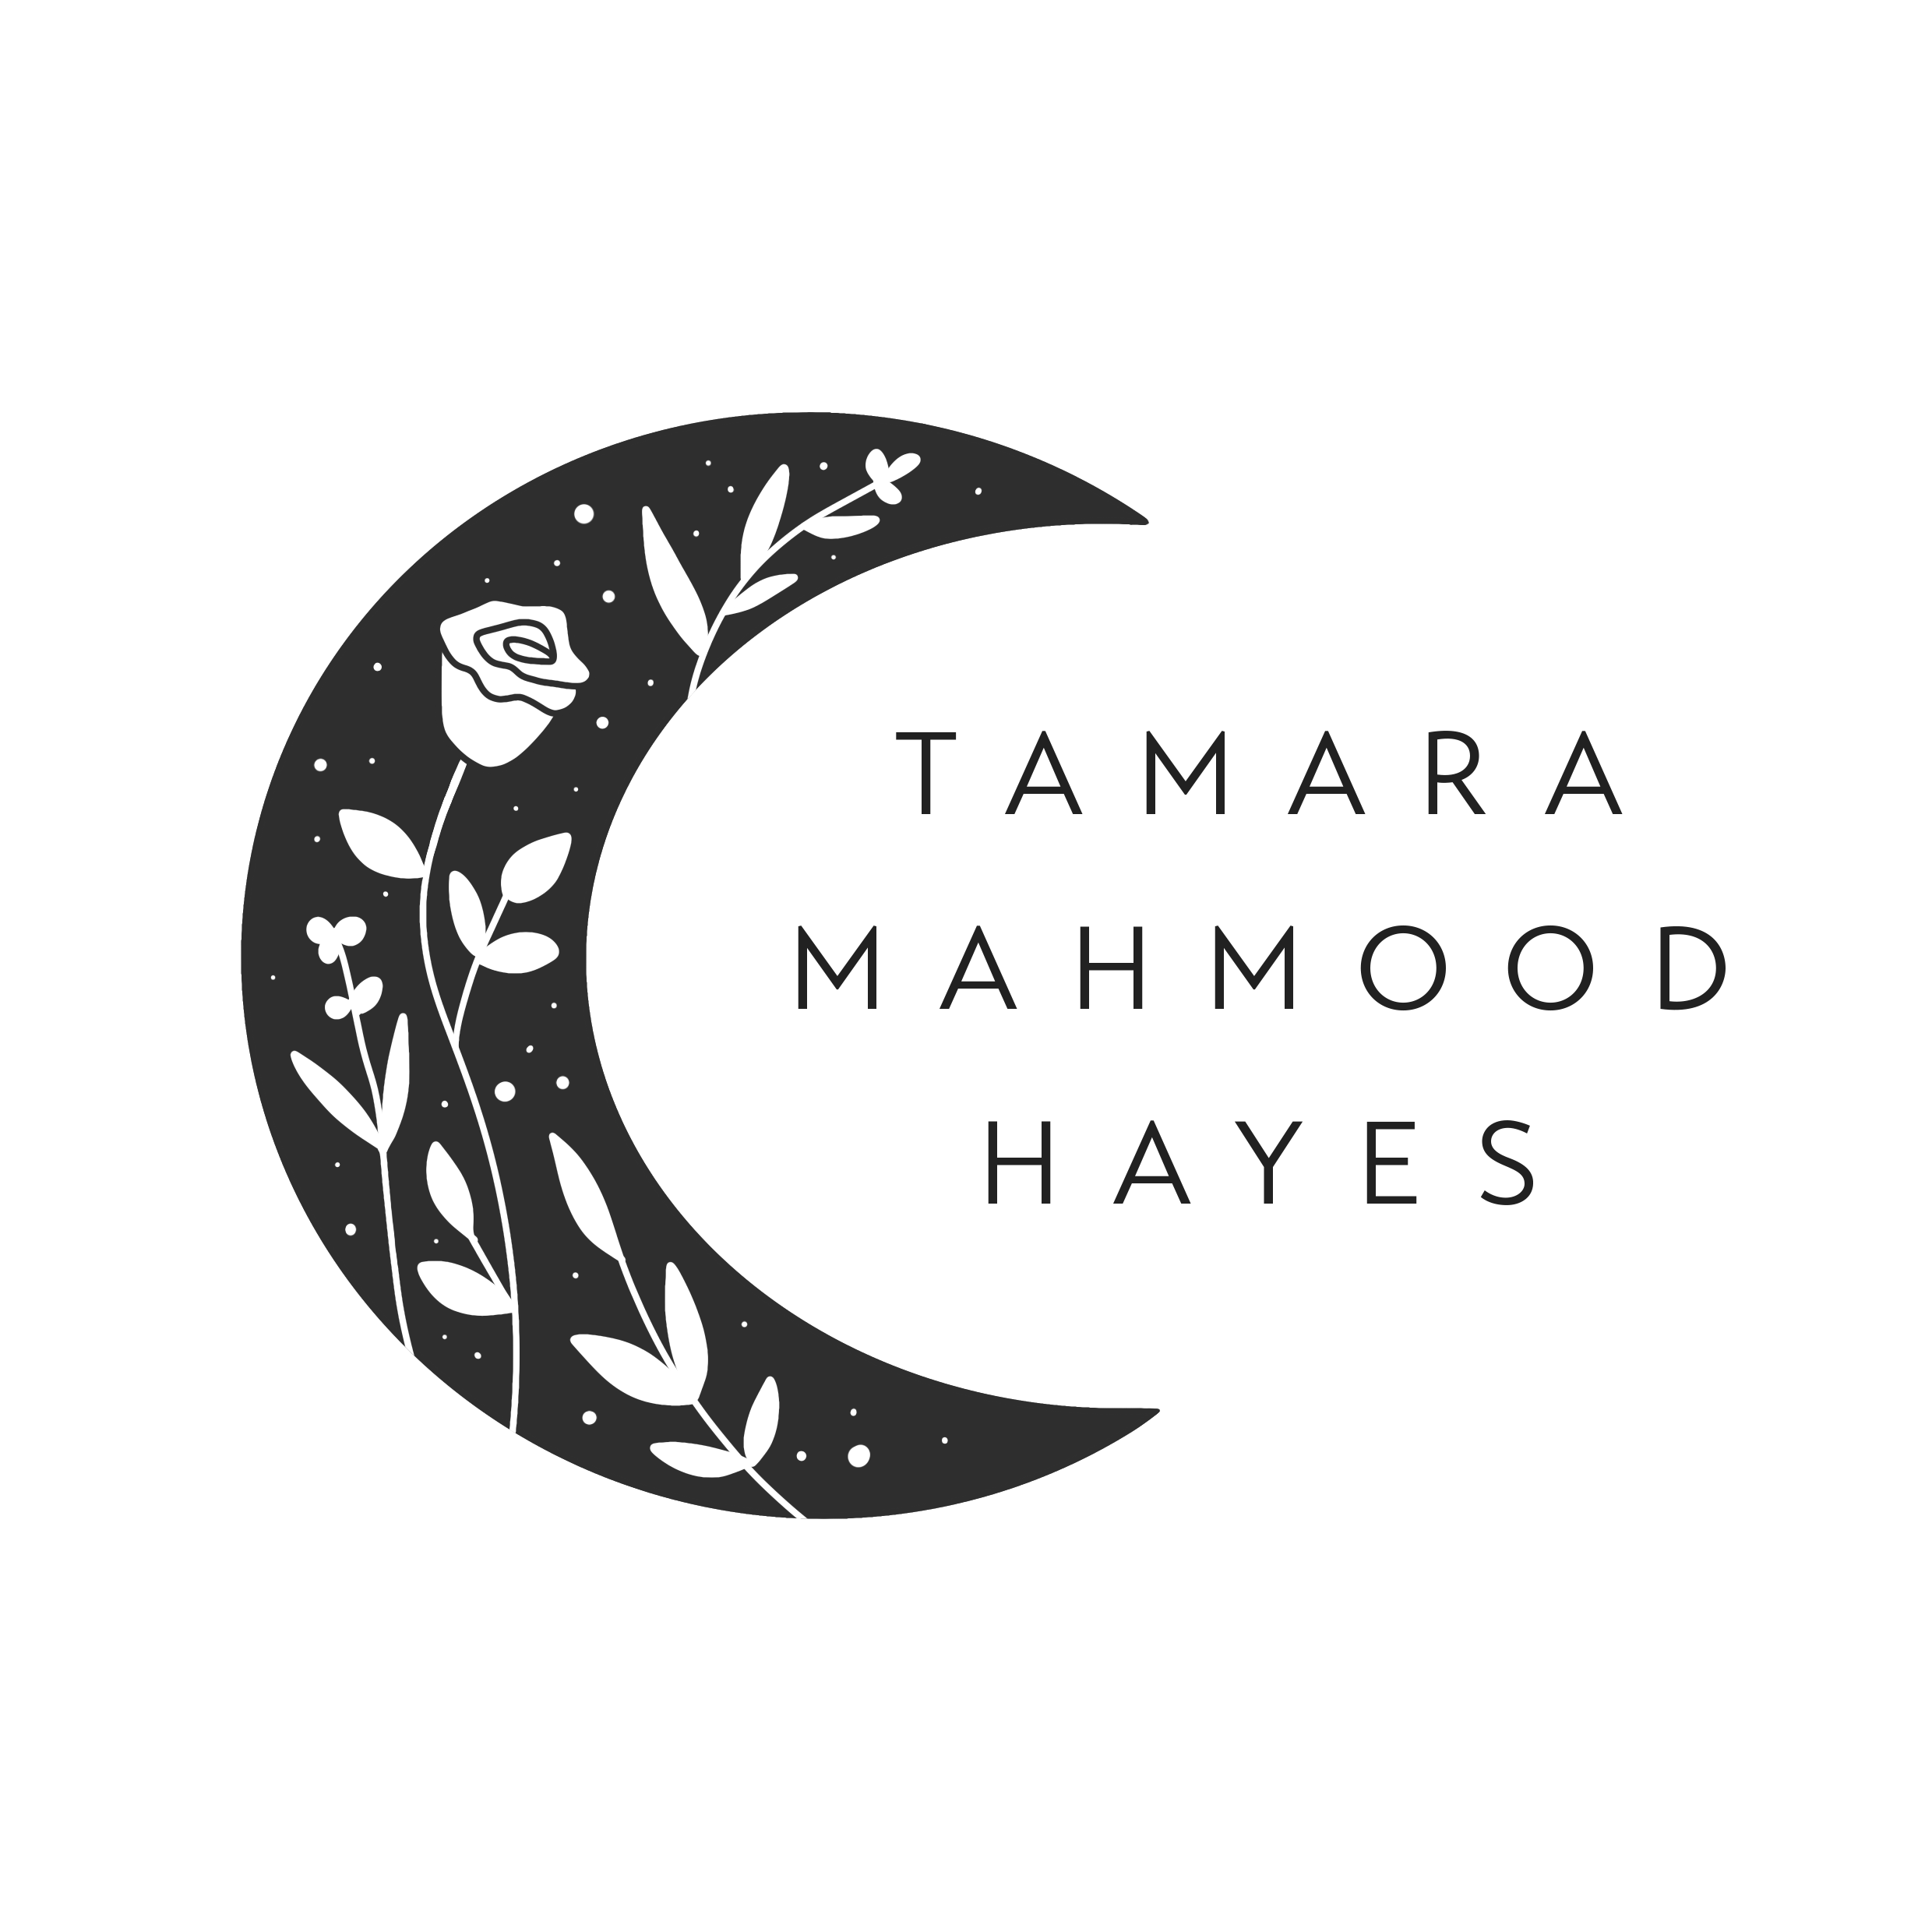 TAMARA MAHMOOD HAYES